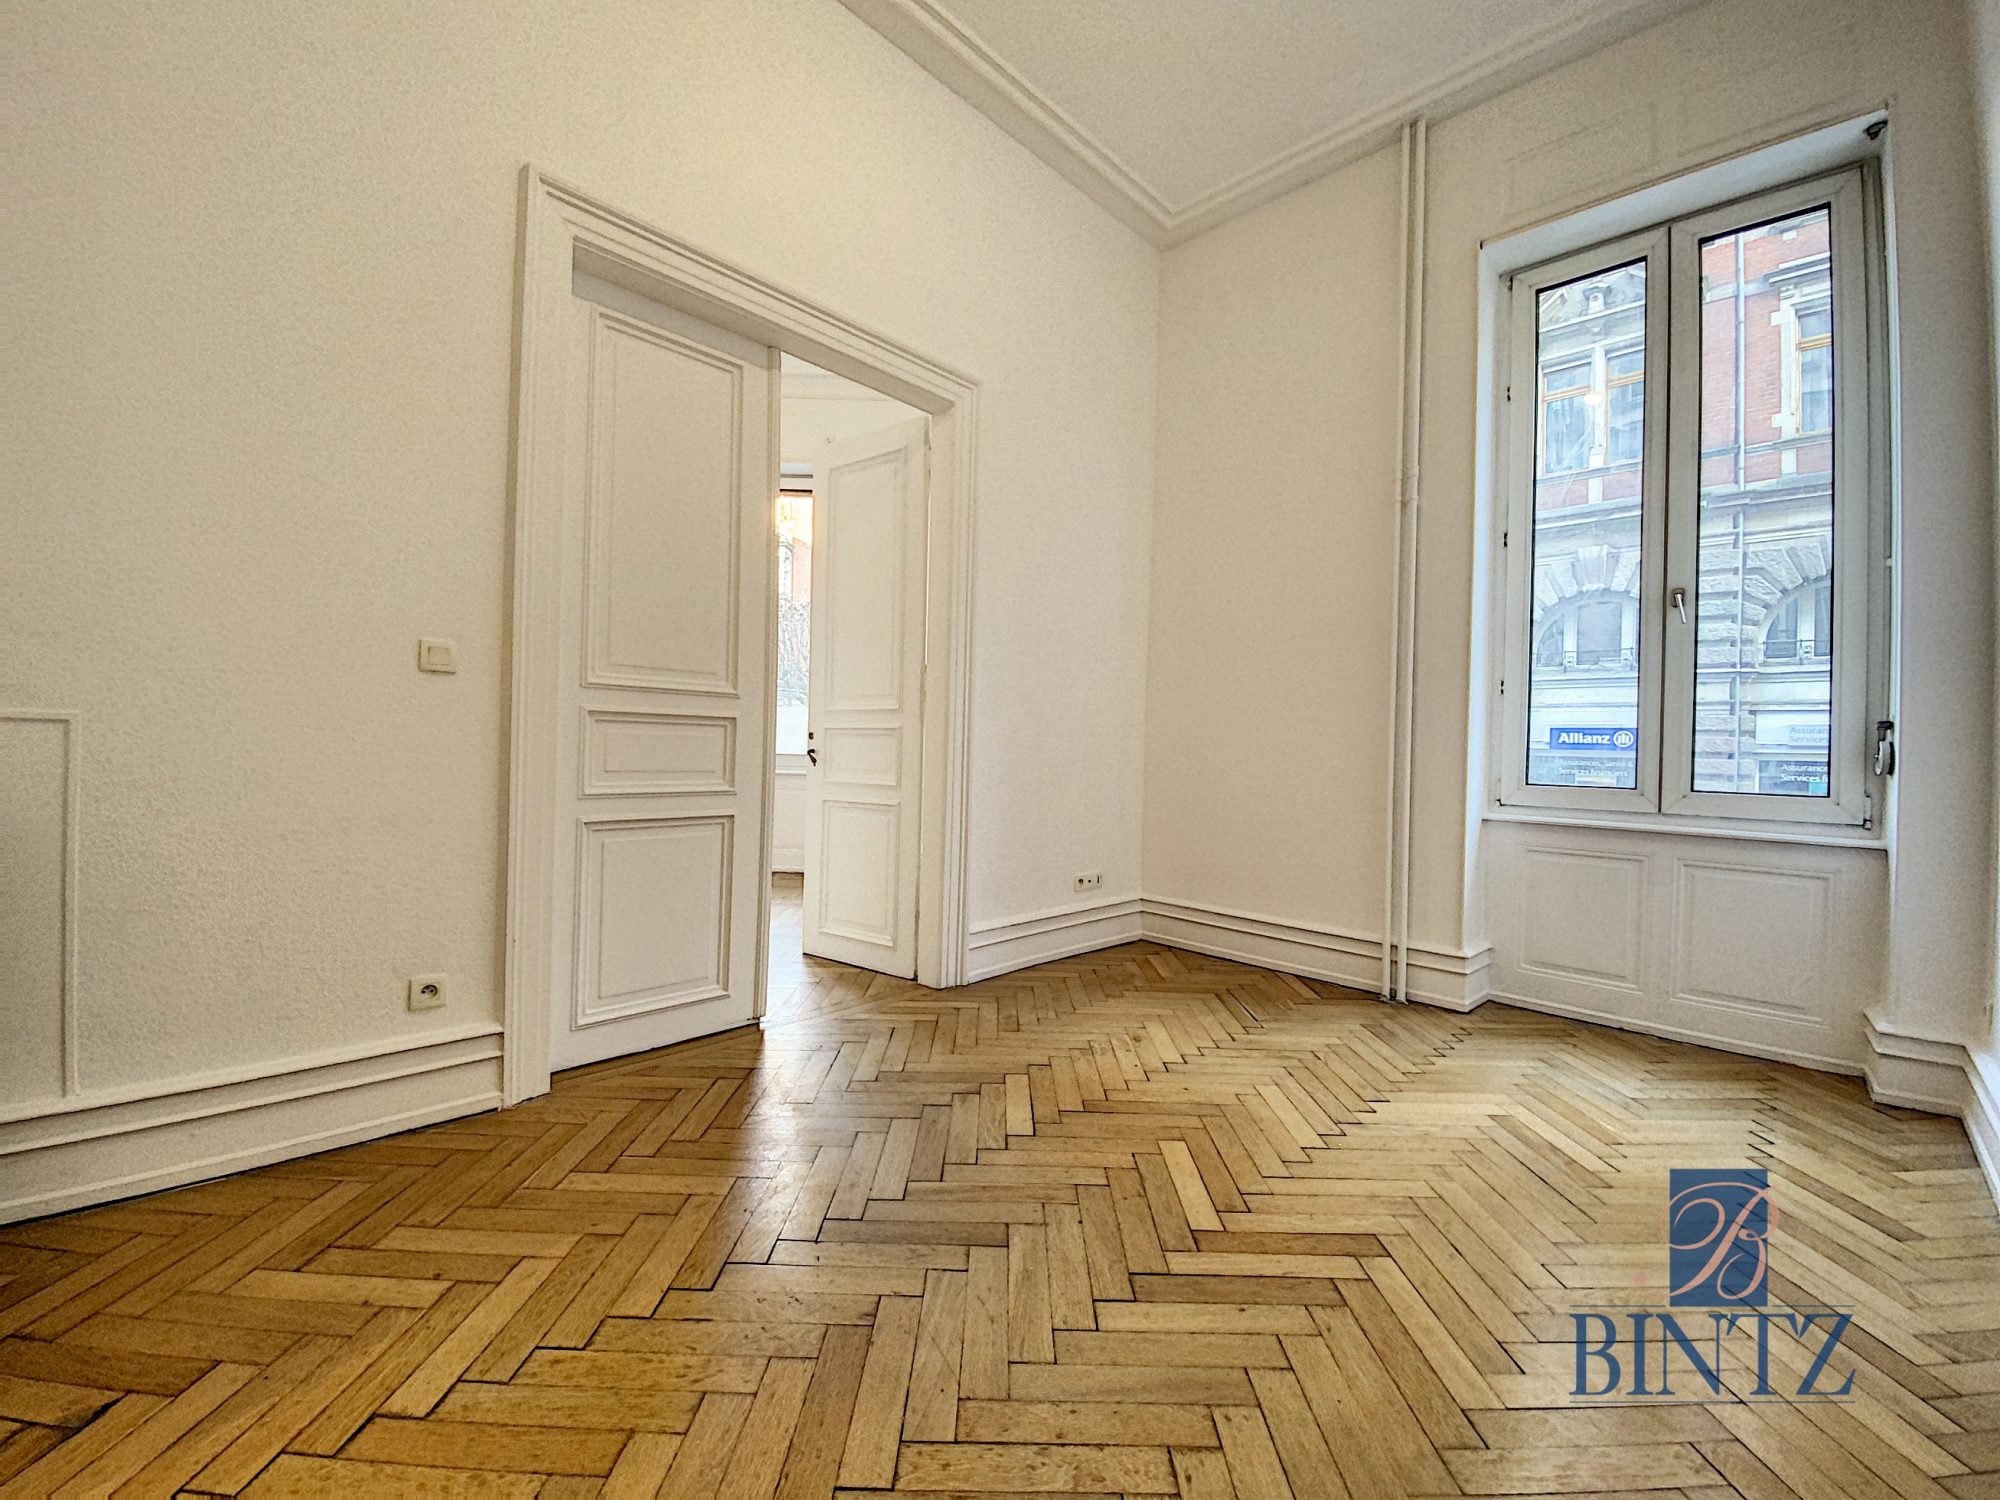 5 pièces rue Wimpheling - location appartement Strasbourg - Bintz Immobilier - 1